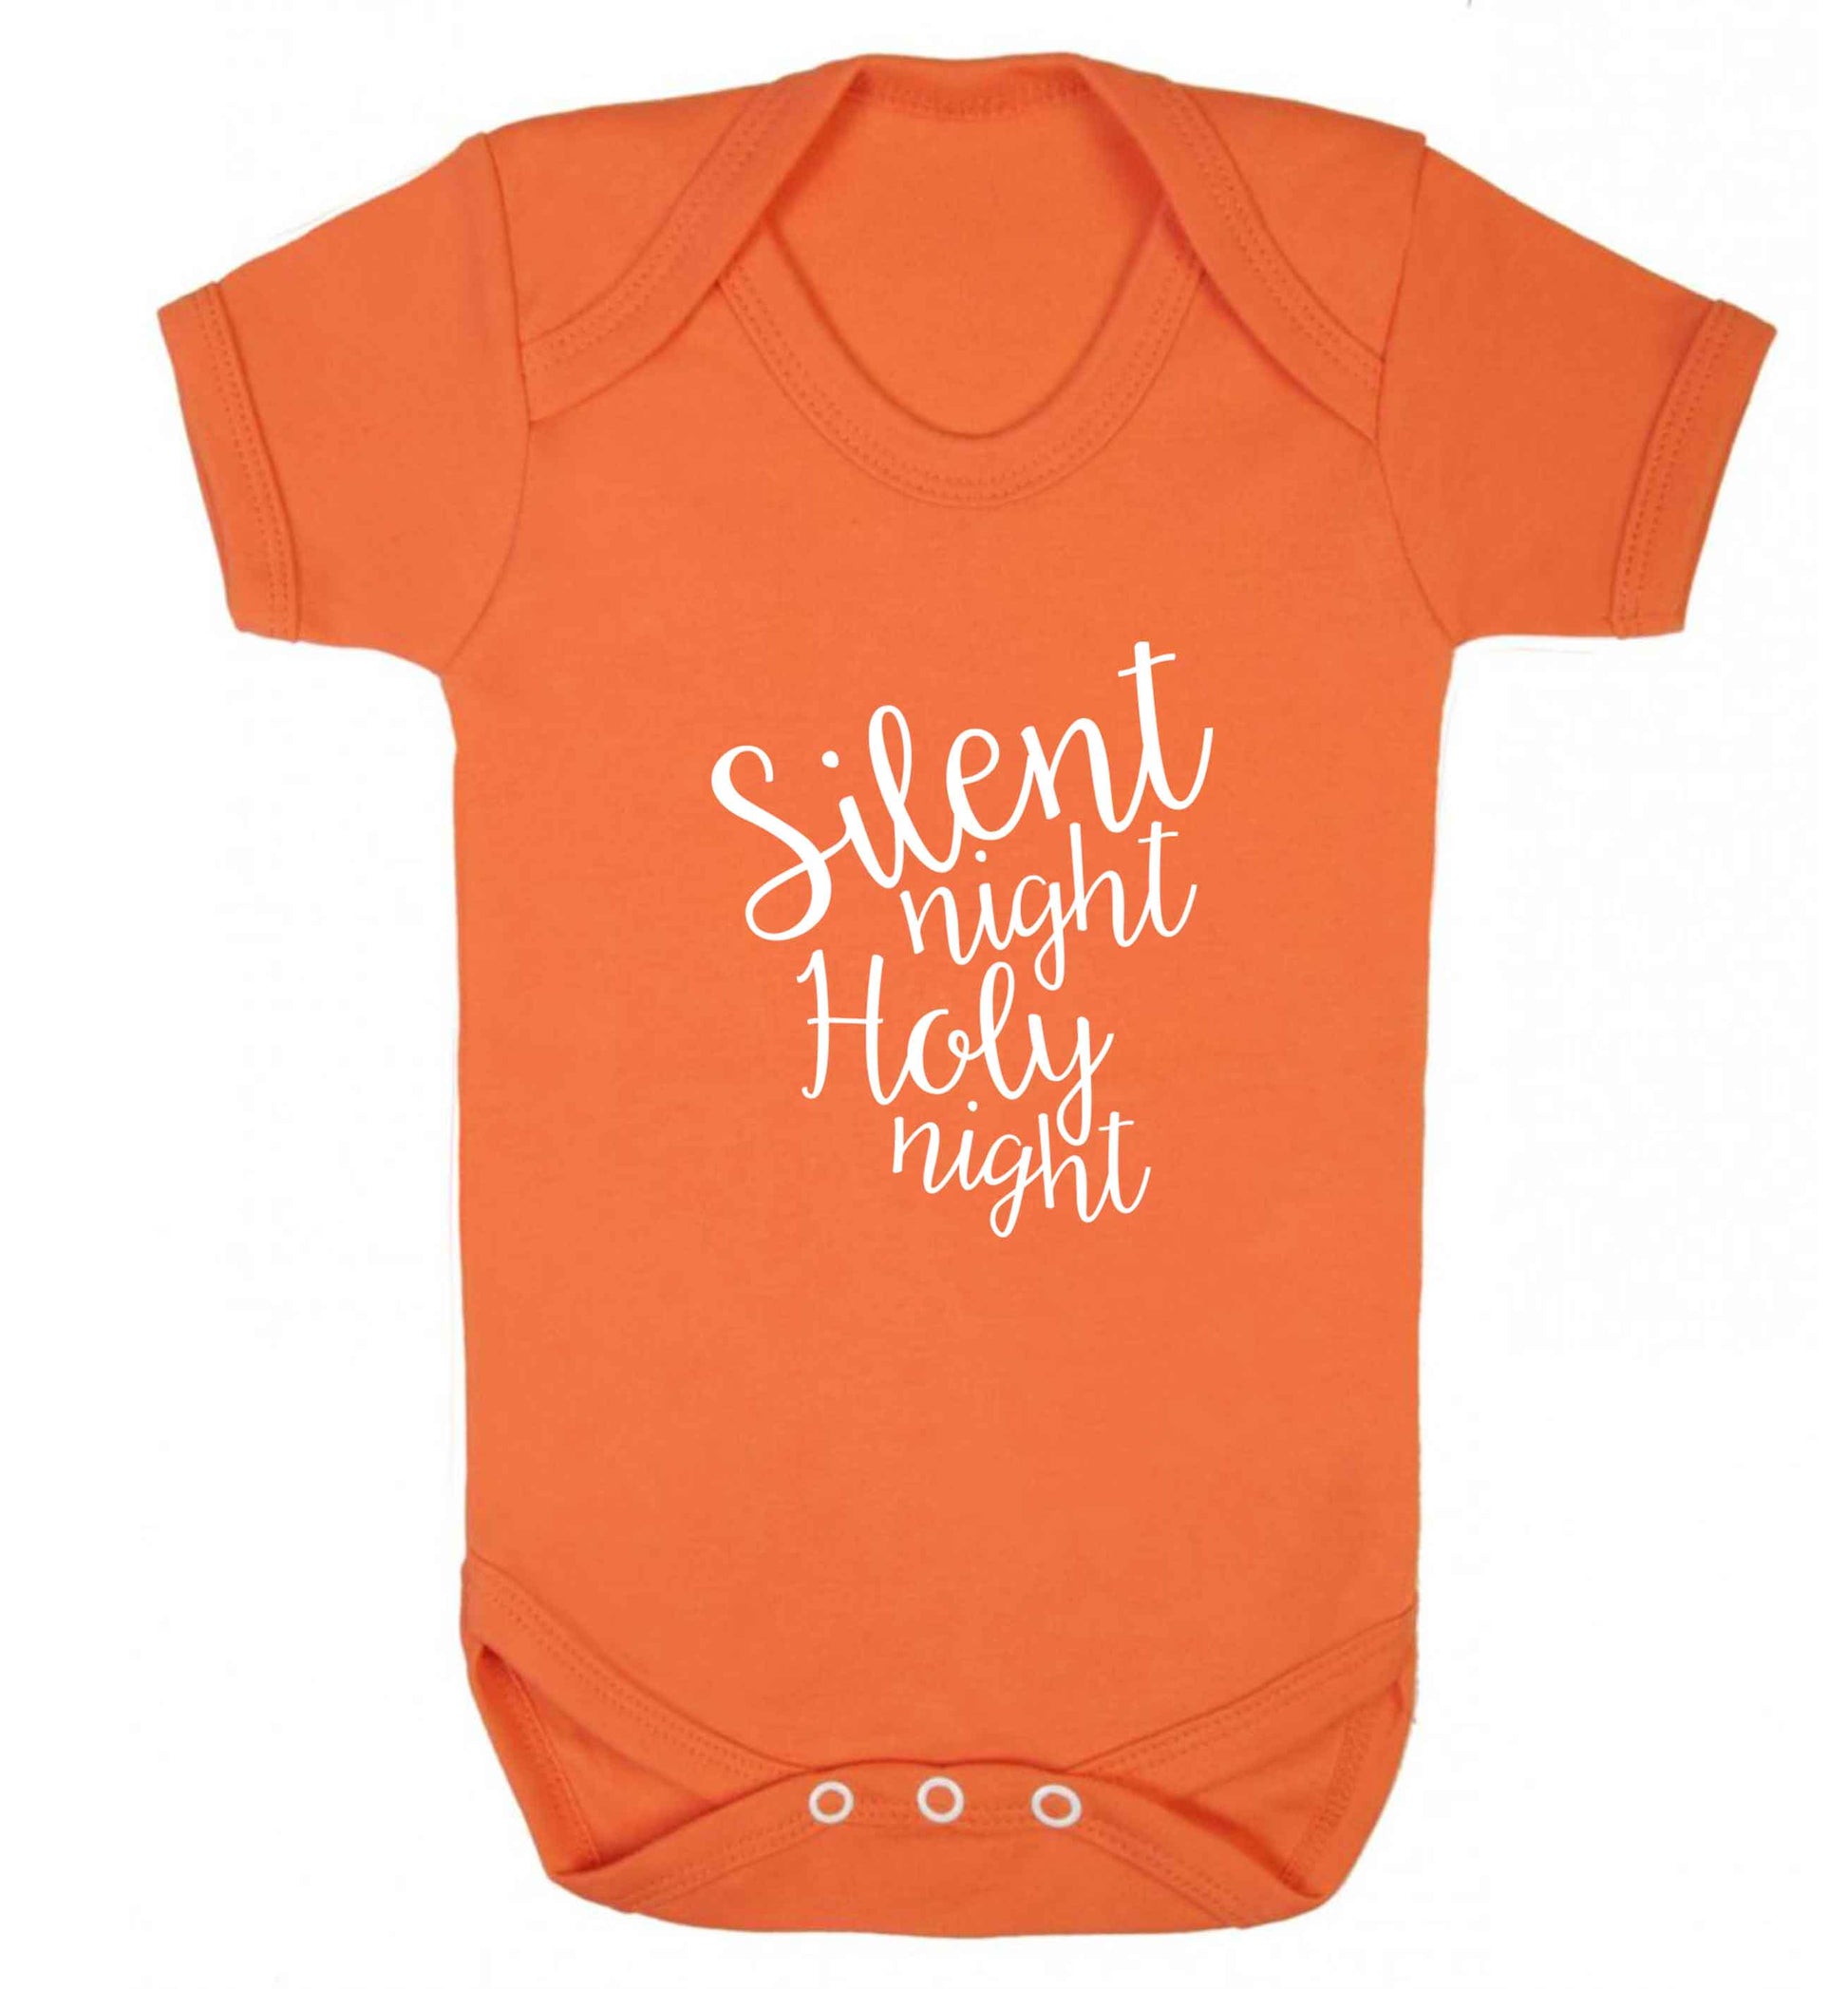 Silent night holy night baby vest orange 18-24 months